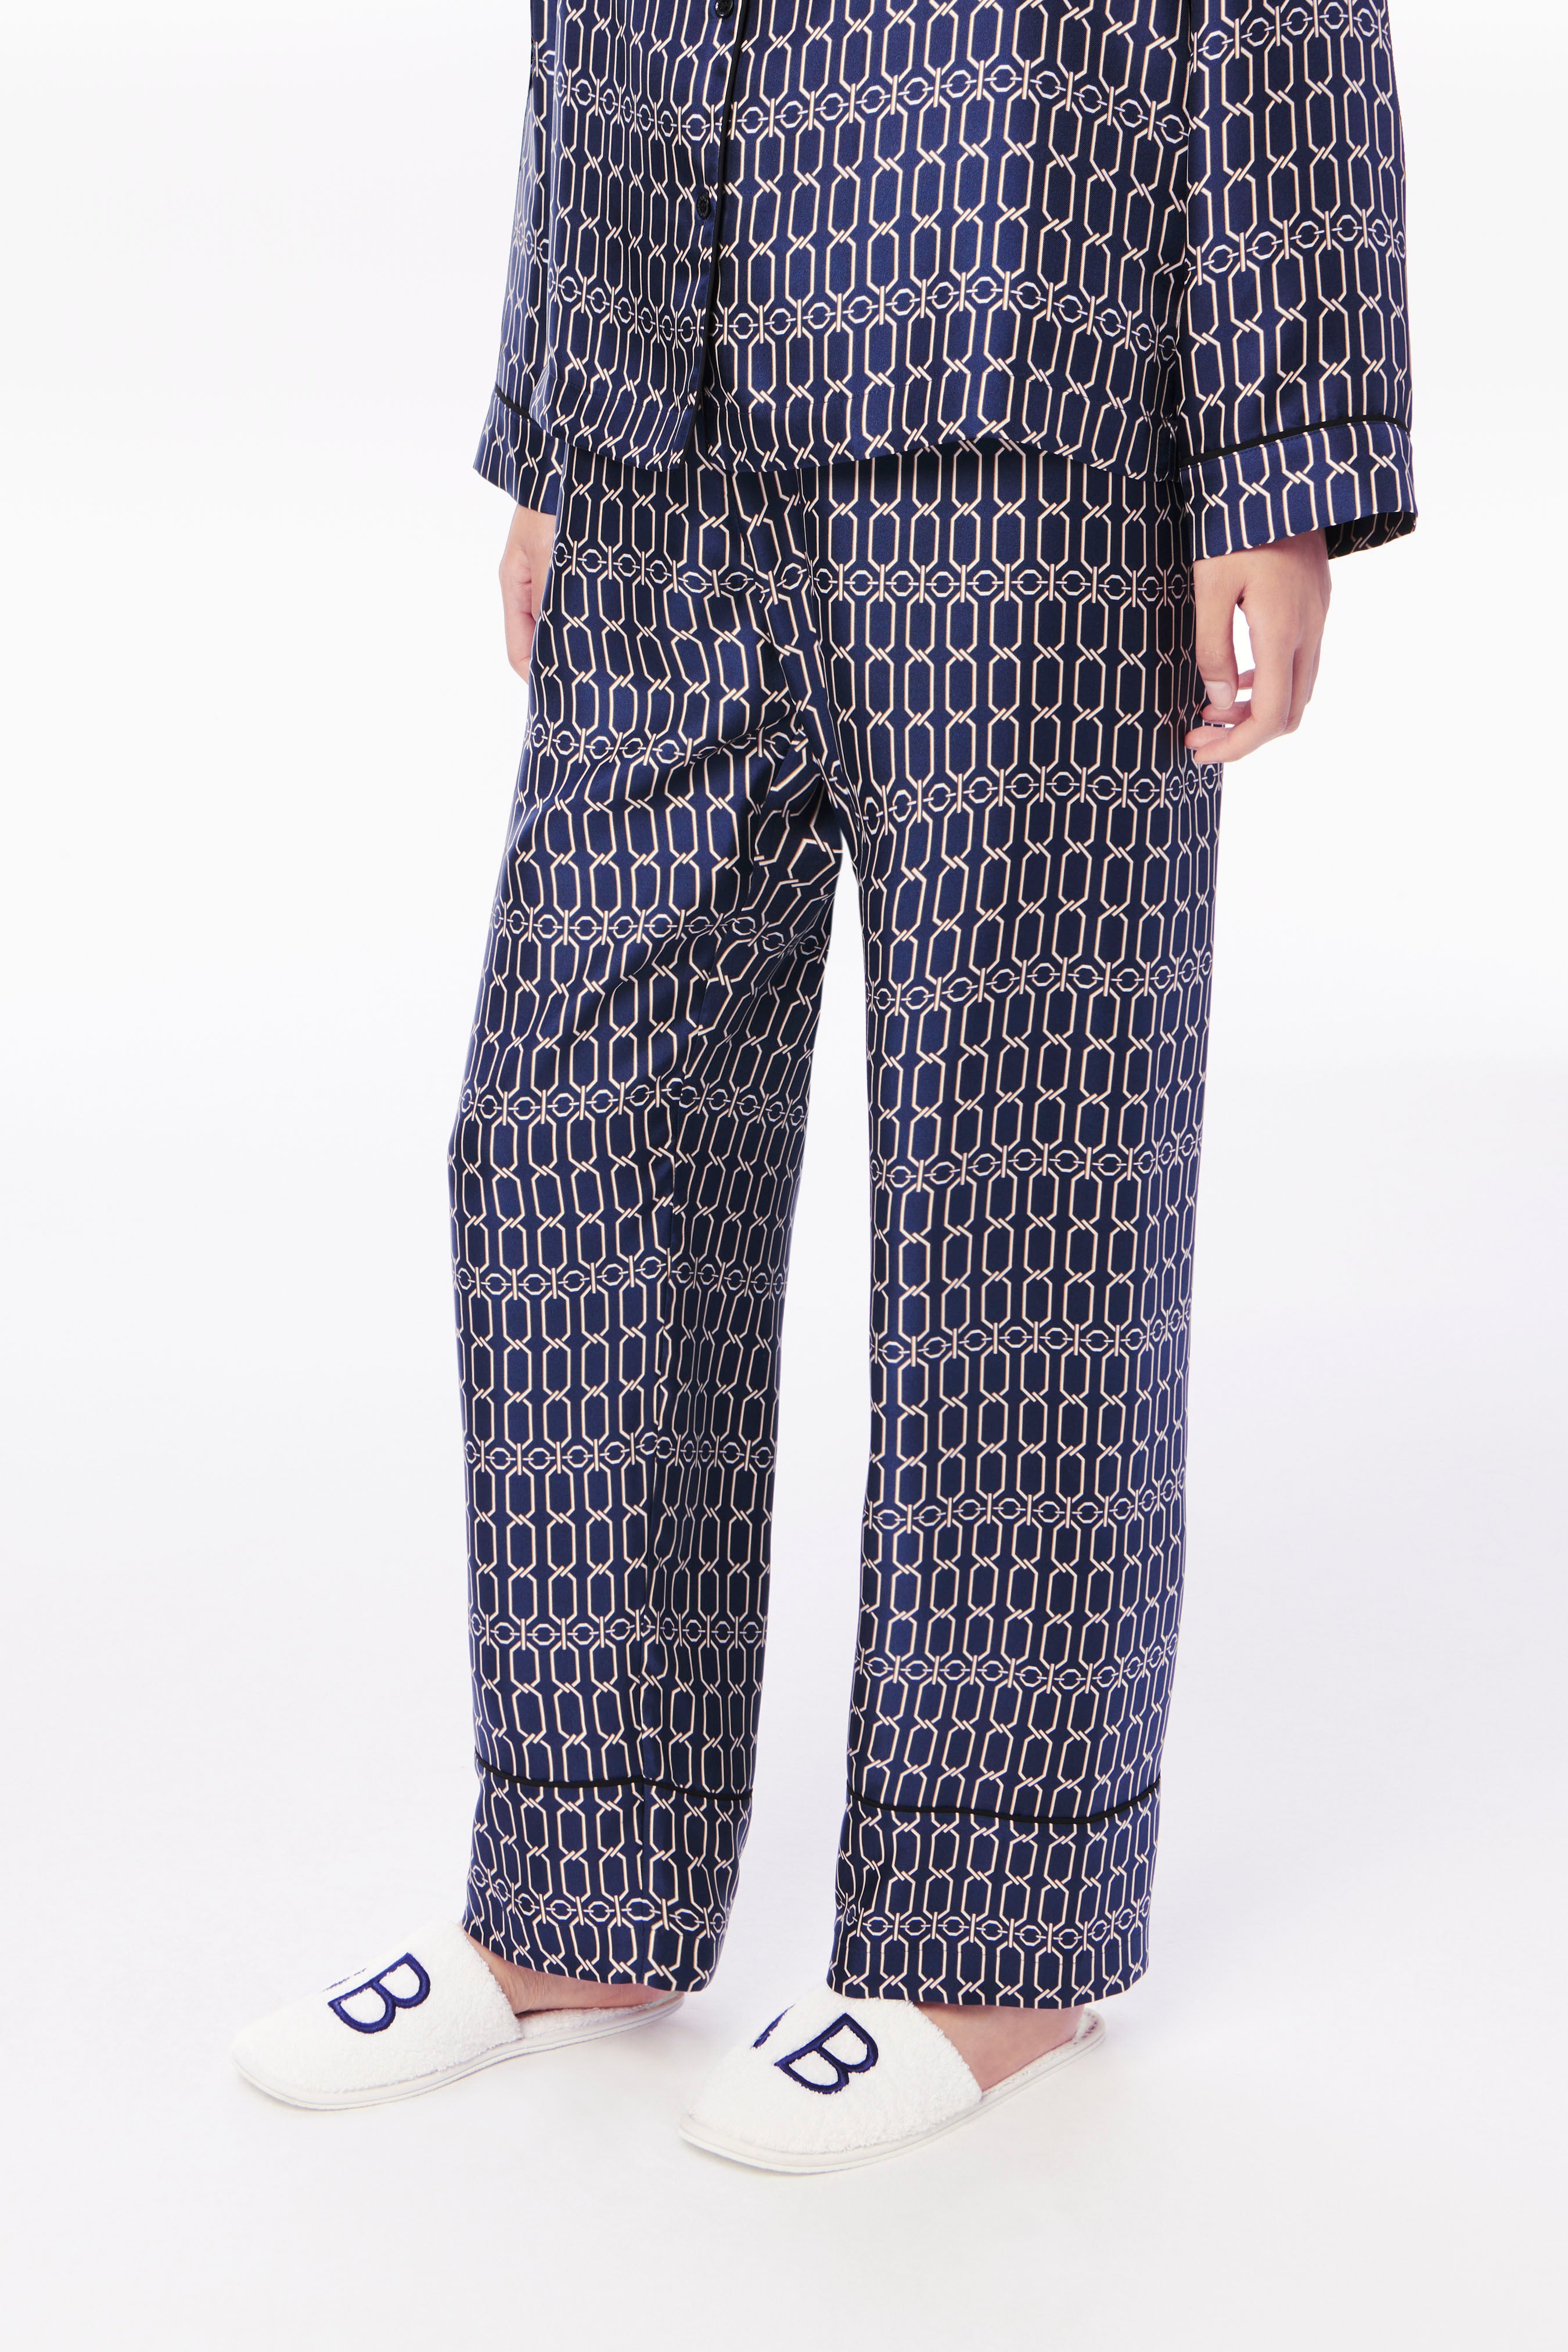 Victoria Beckham Chain Print Pyjama Set in Ivory L